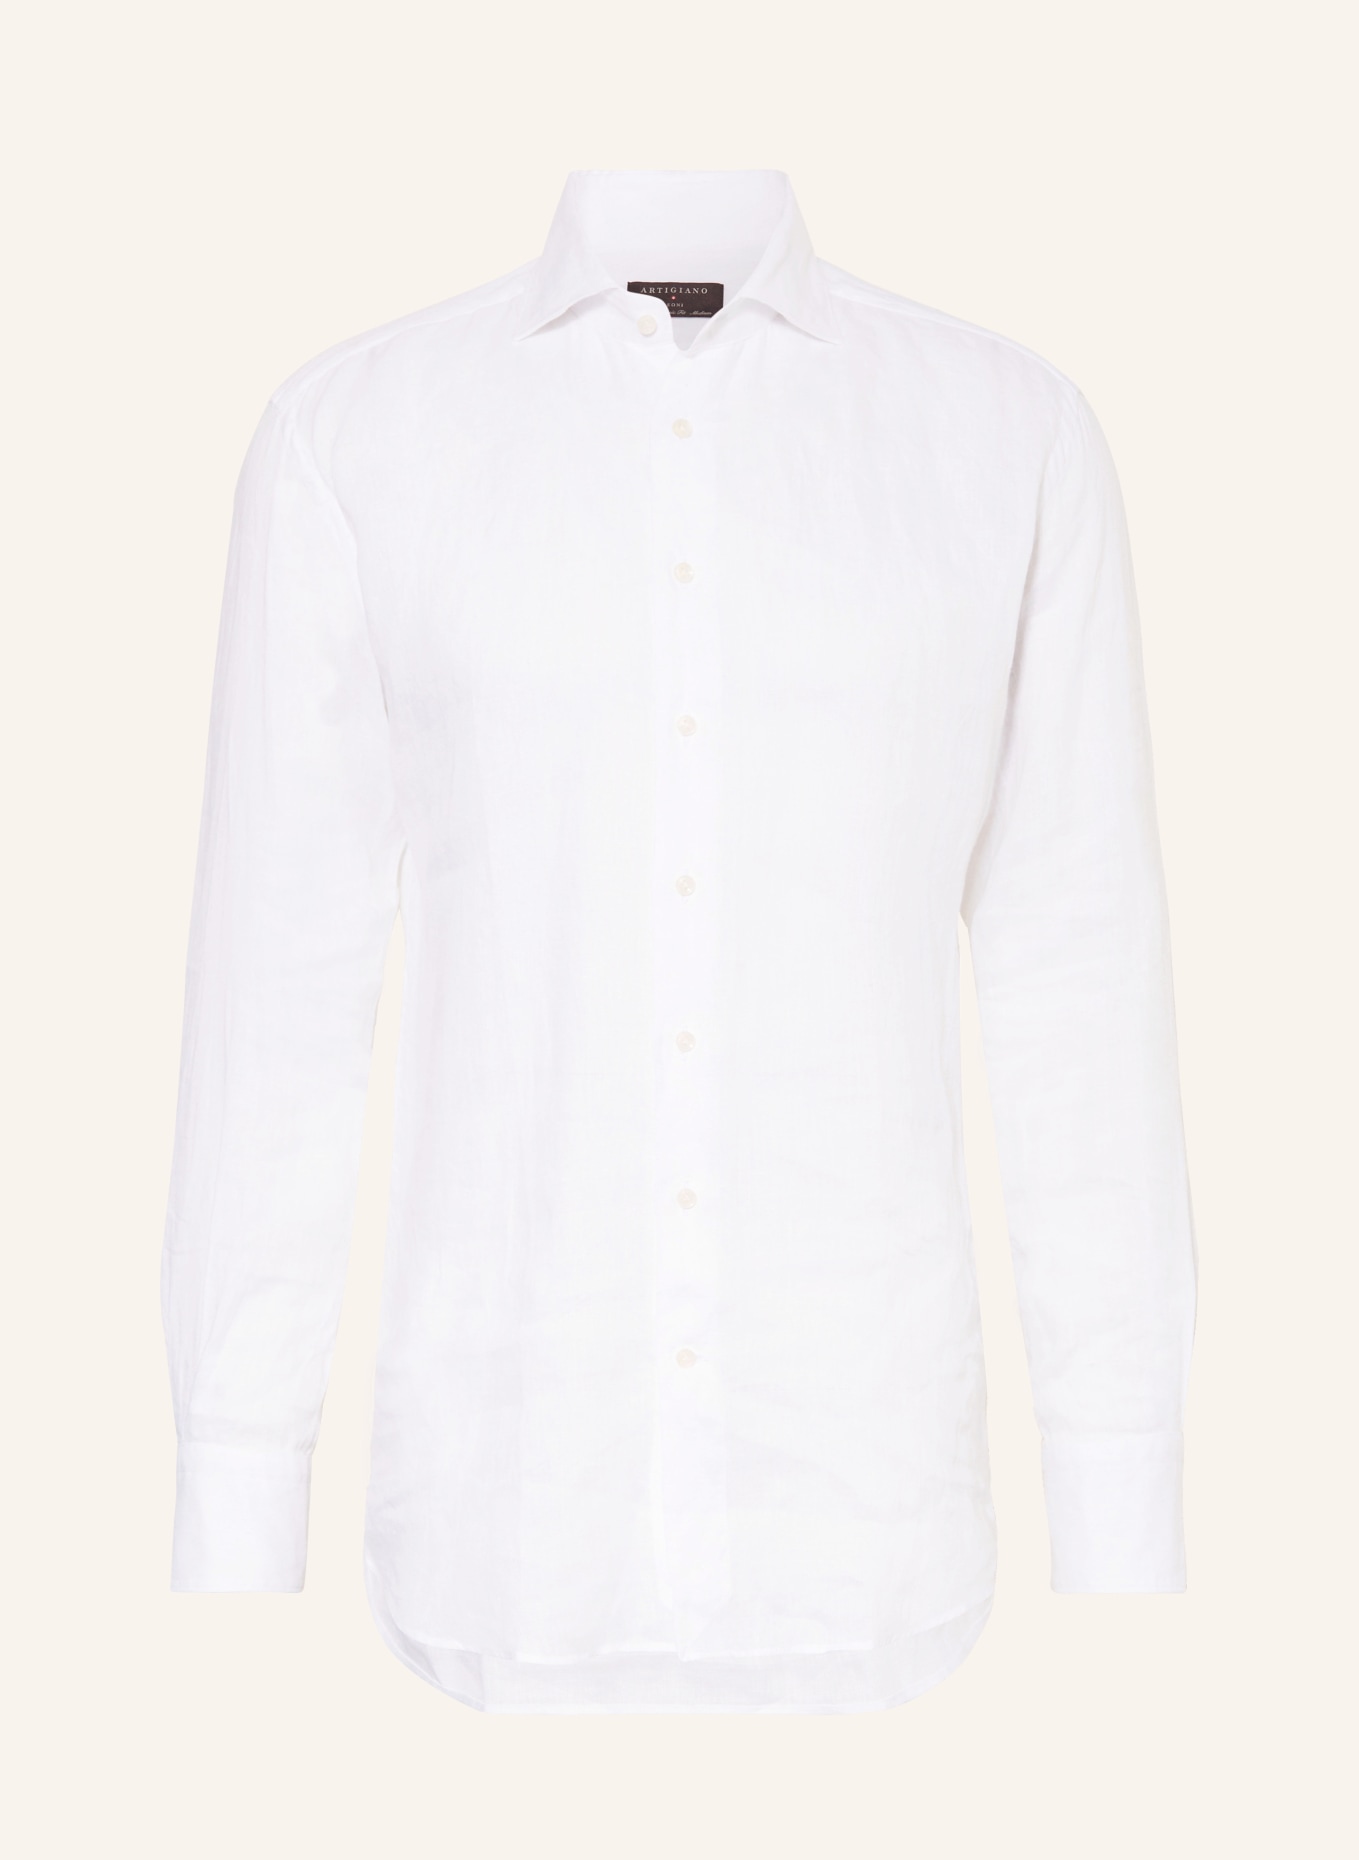 ARTIGIANO Linen shirt classic fit, Color: 1 uni white (Image 1)